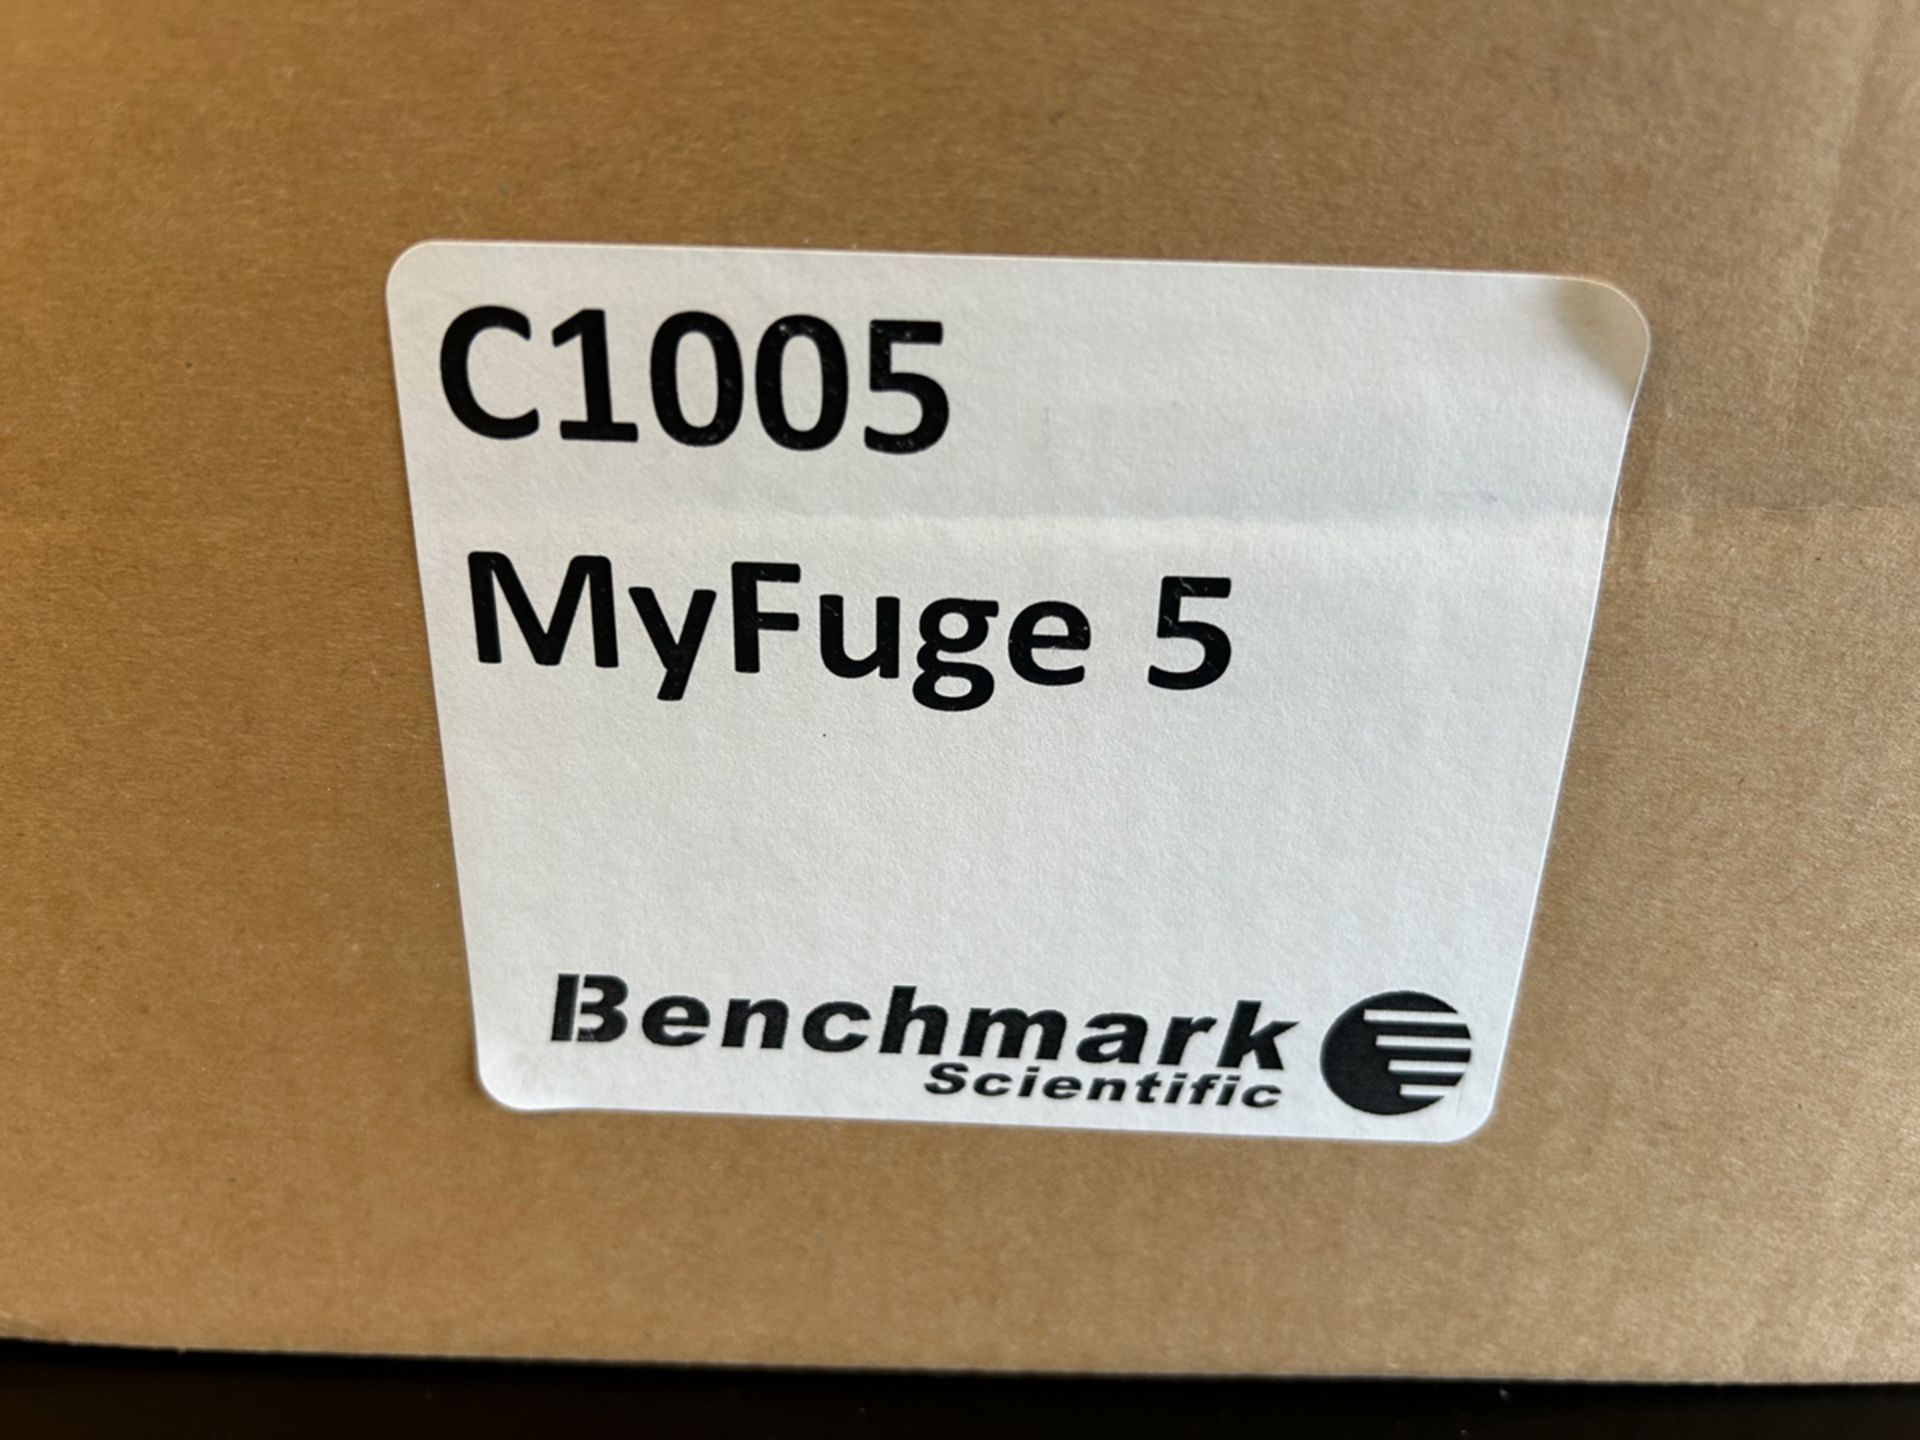 Benchmark c1005 myfuge 5 Microcentrifuge with combination rotor - Image 4 of 4